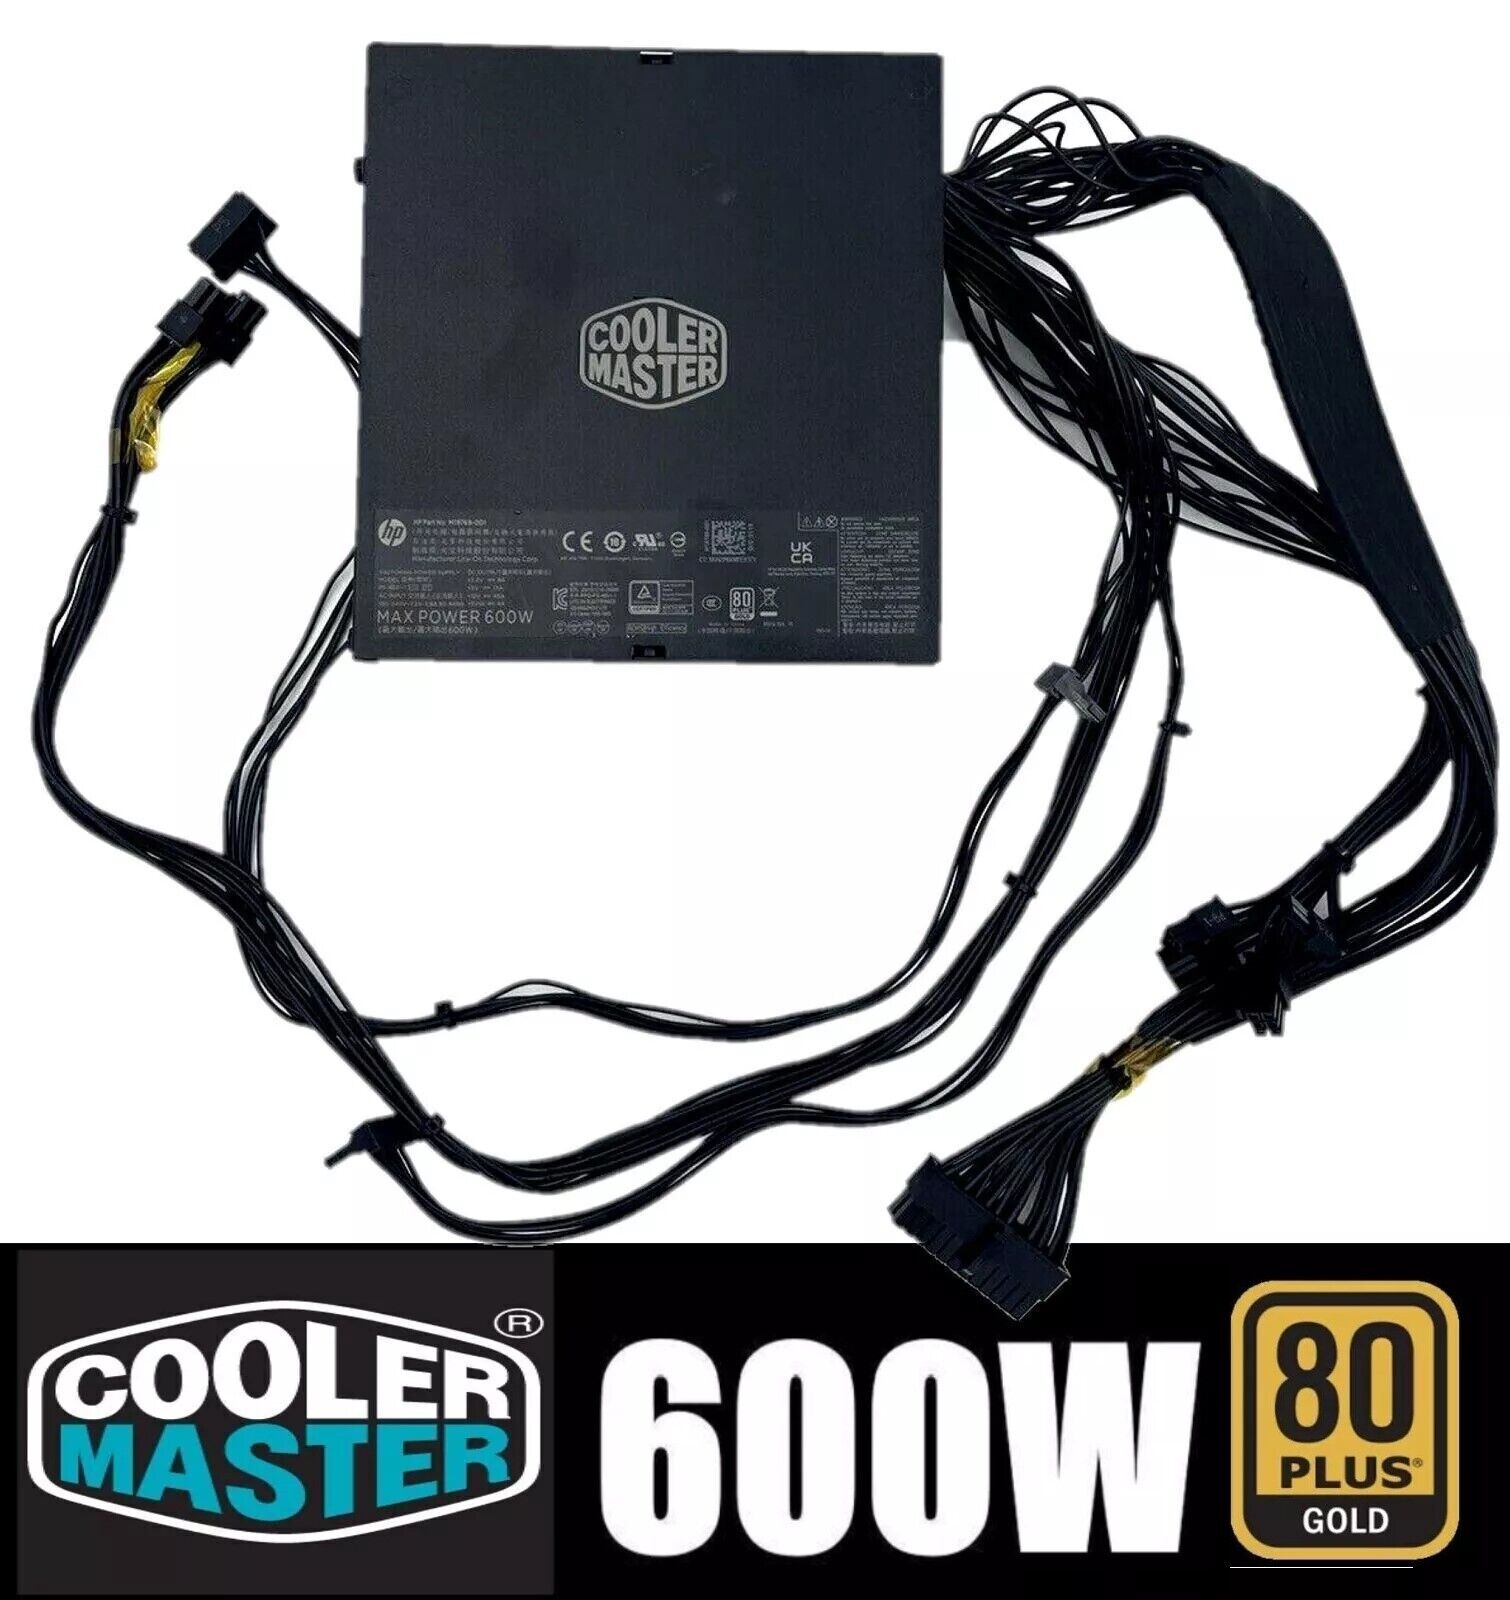 Cooler Master 600W ATX PSU Gaming Computer Power Supply 80Plus Gold Certified